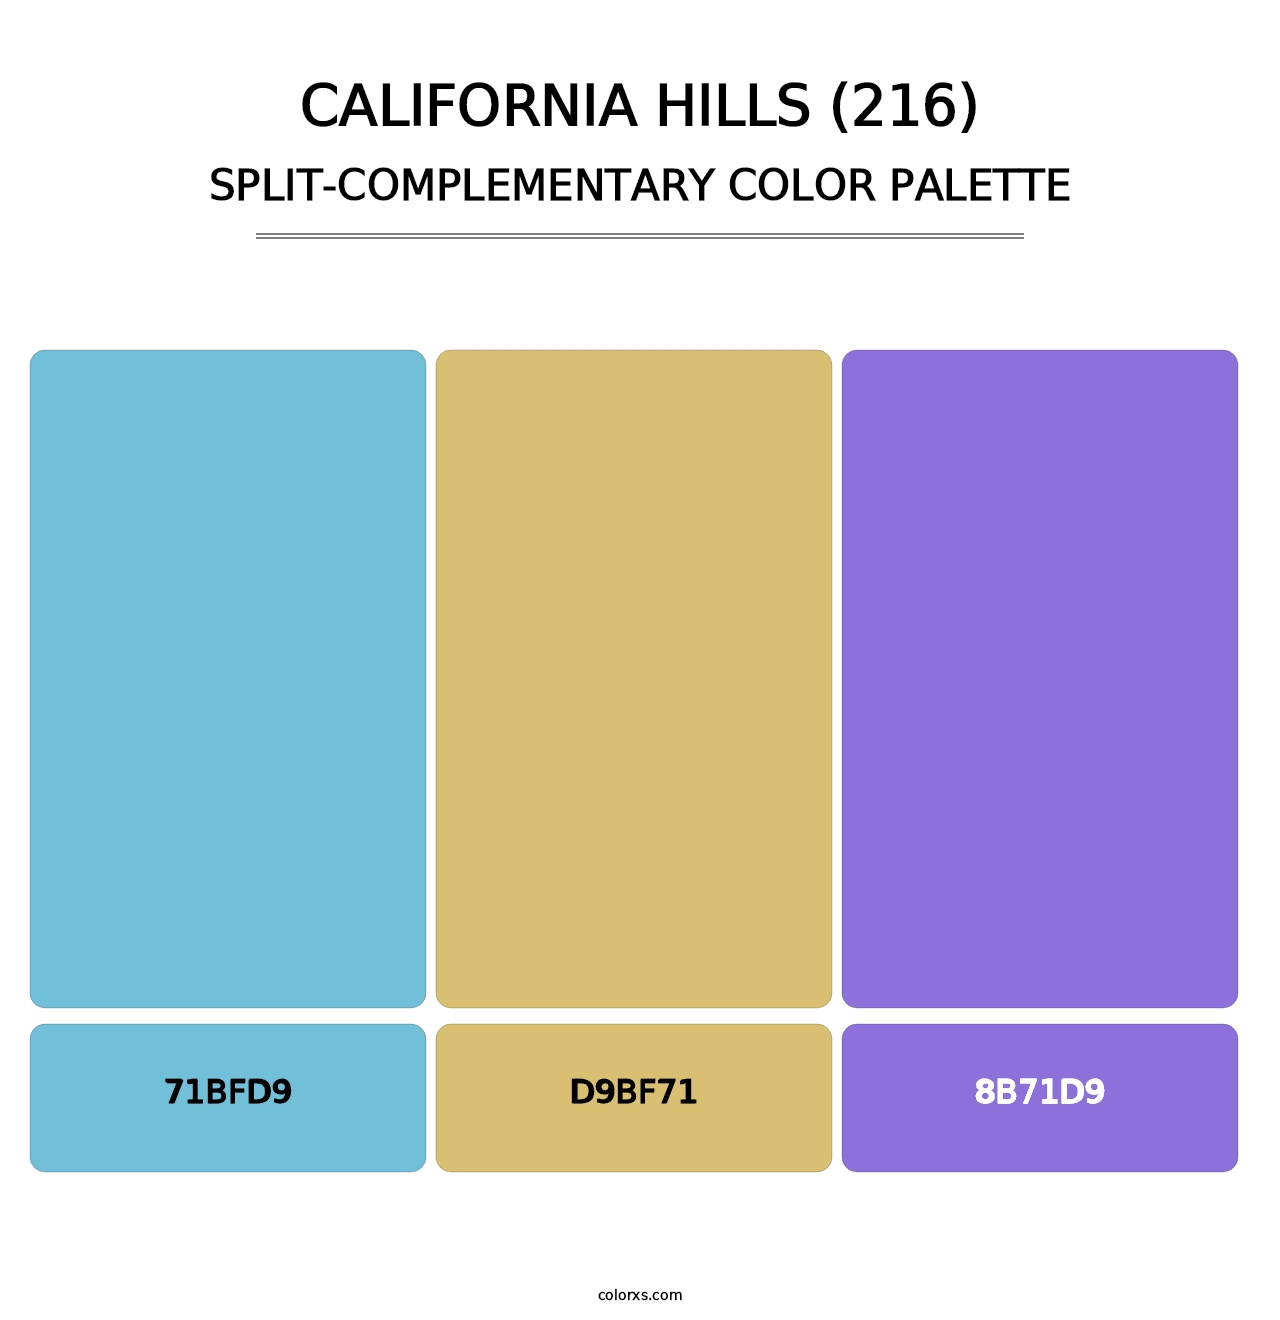 California Hills (216) - Split-Complementary Color Palette